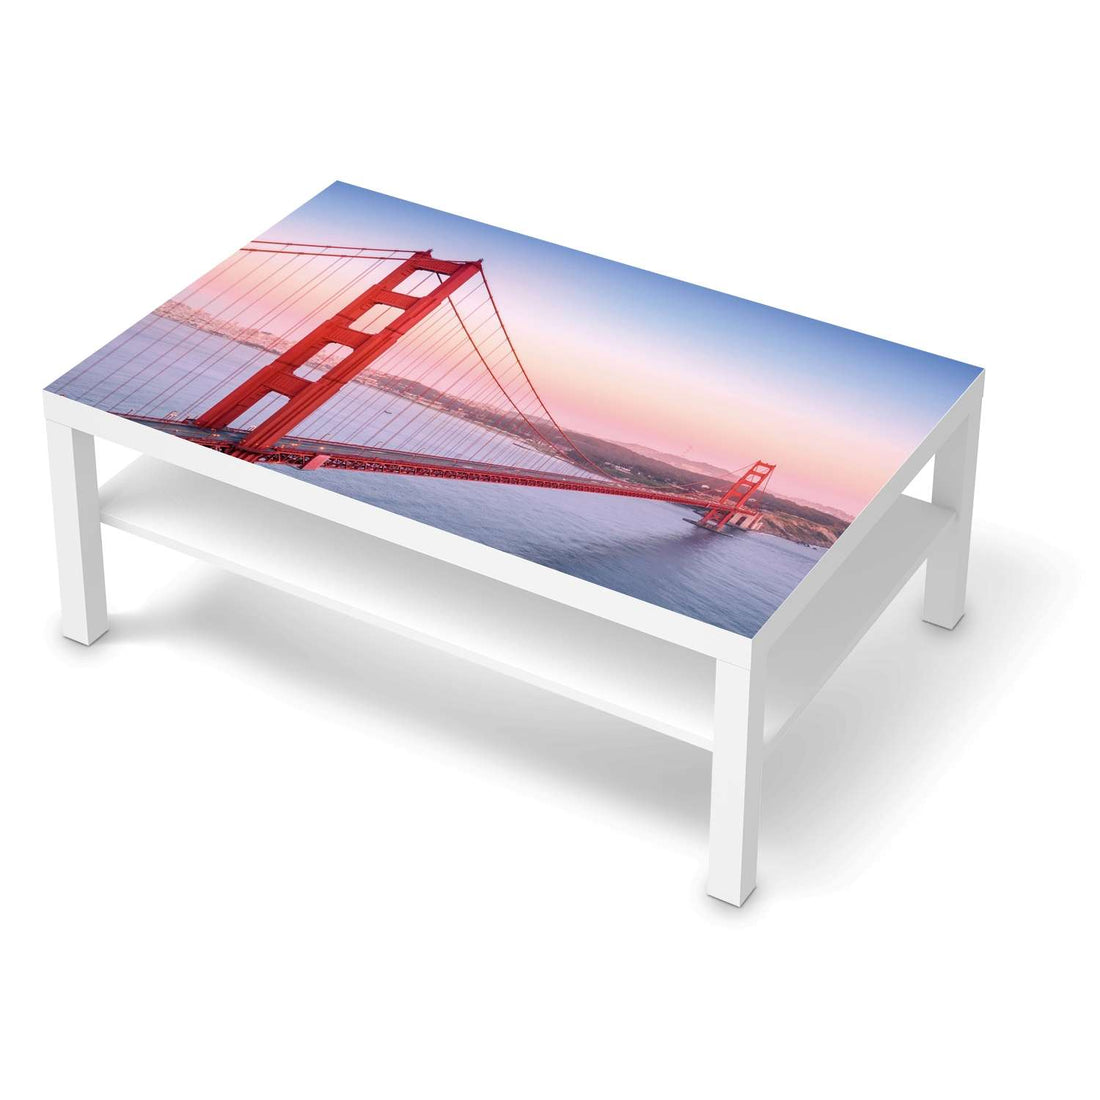 Klebefolie Golden Gate - IKEA Lack Tisch 118x78 cm - weiss